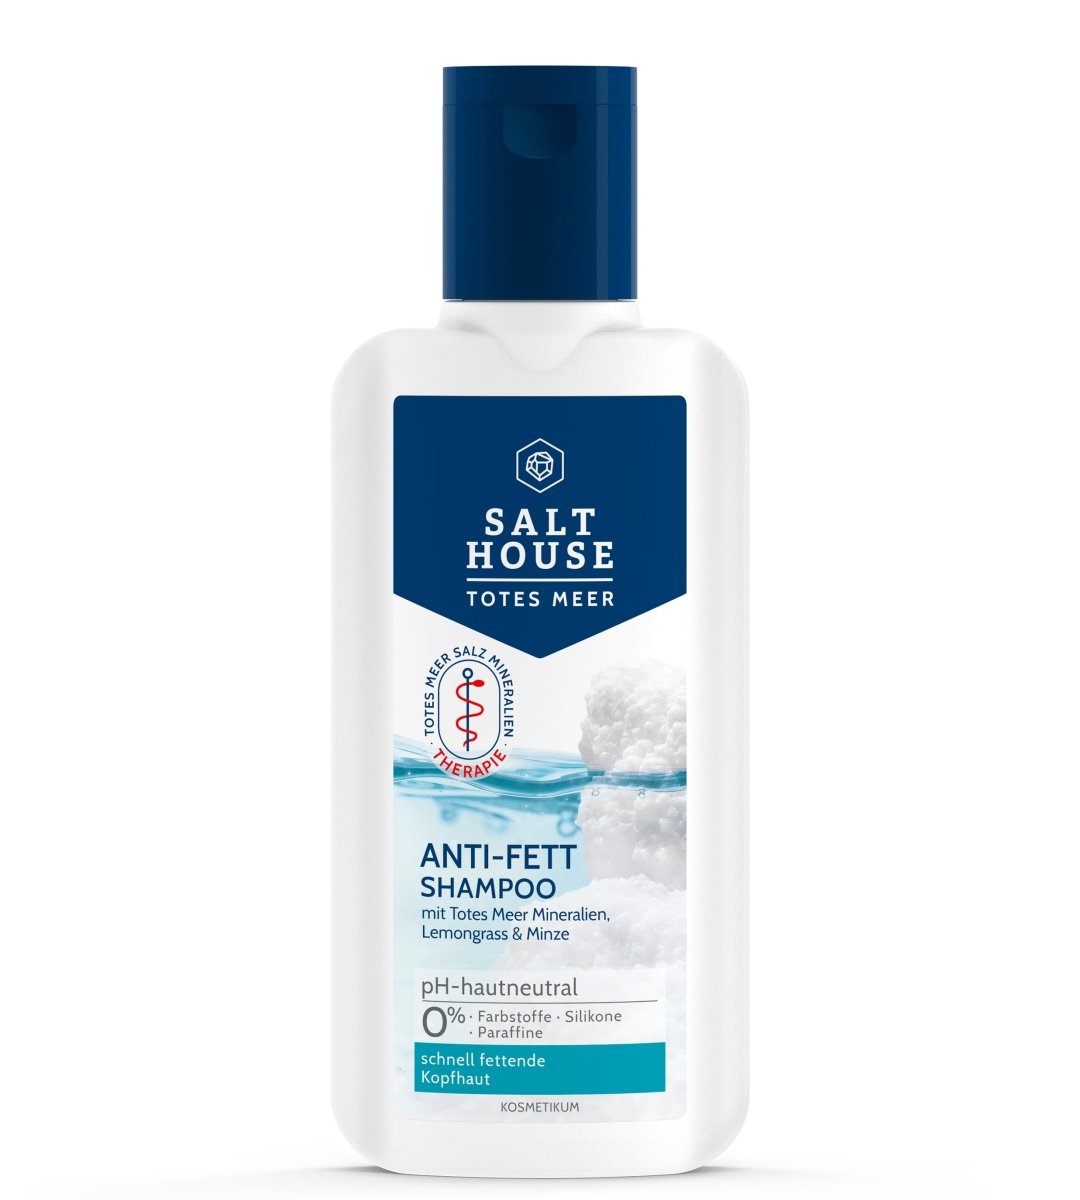 SALTHOUSE® Original Totes Meer Therapie | Shampoo | Anti-Fett | 250 ml